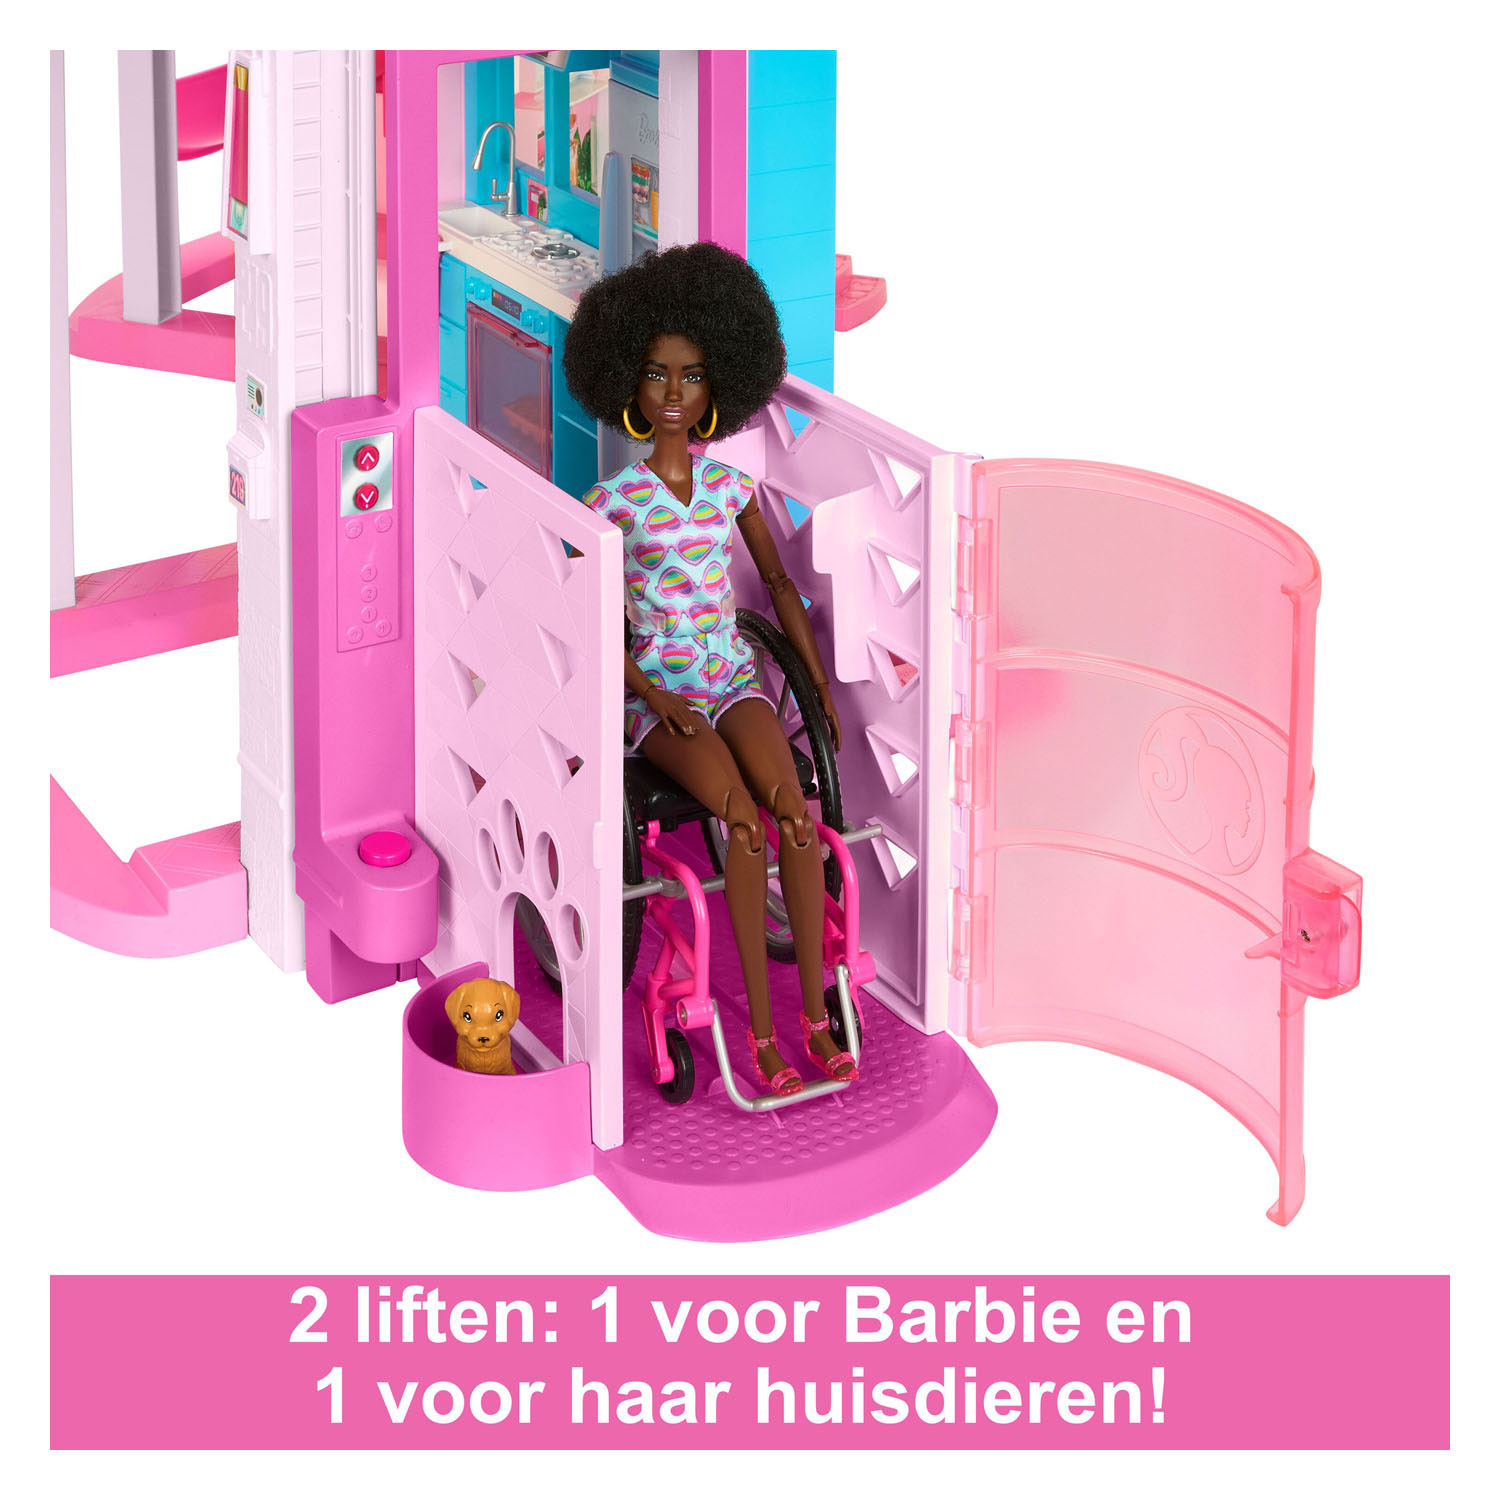 Barbie Dreamhouse Puppenhaus-Spielset